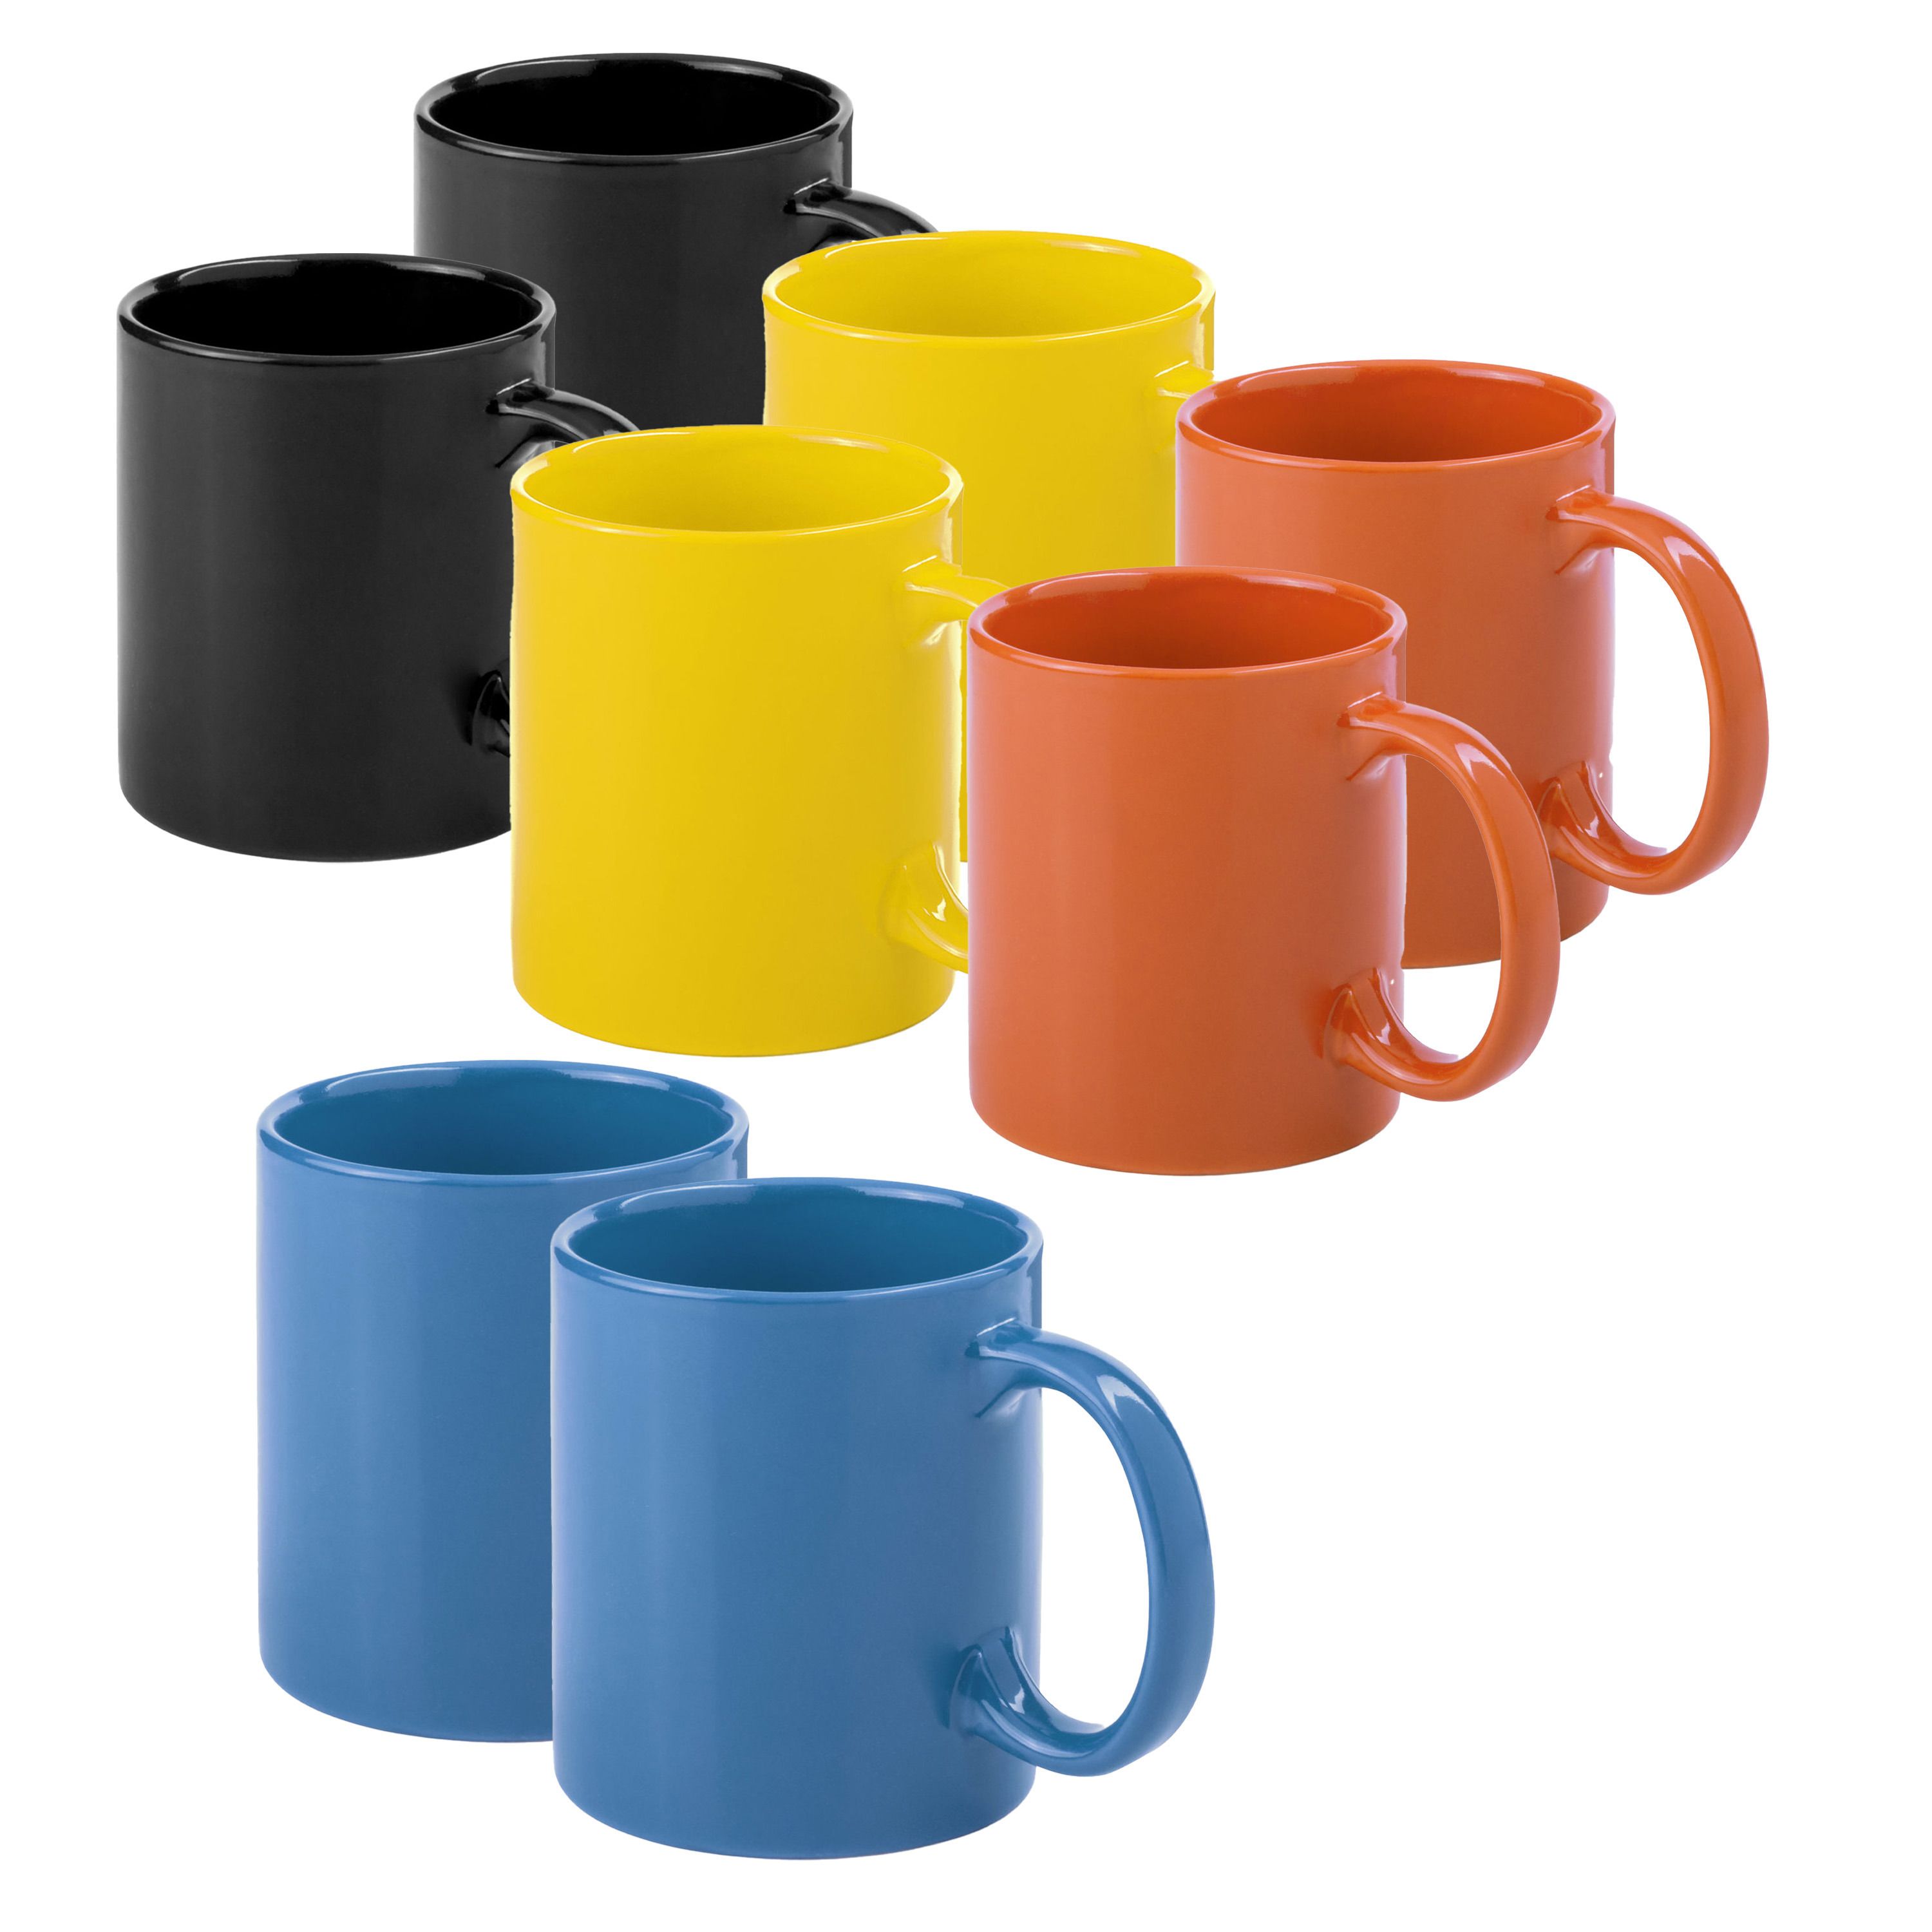 Koffie mokken/drinkbekers Auxerre - 8x - keramiek - geel/oranje/blauw/zwart - 370 ml -